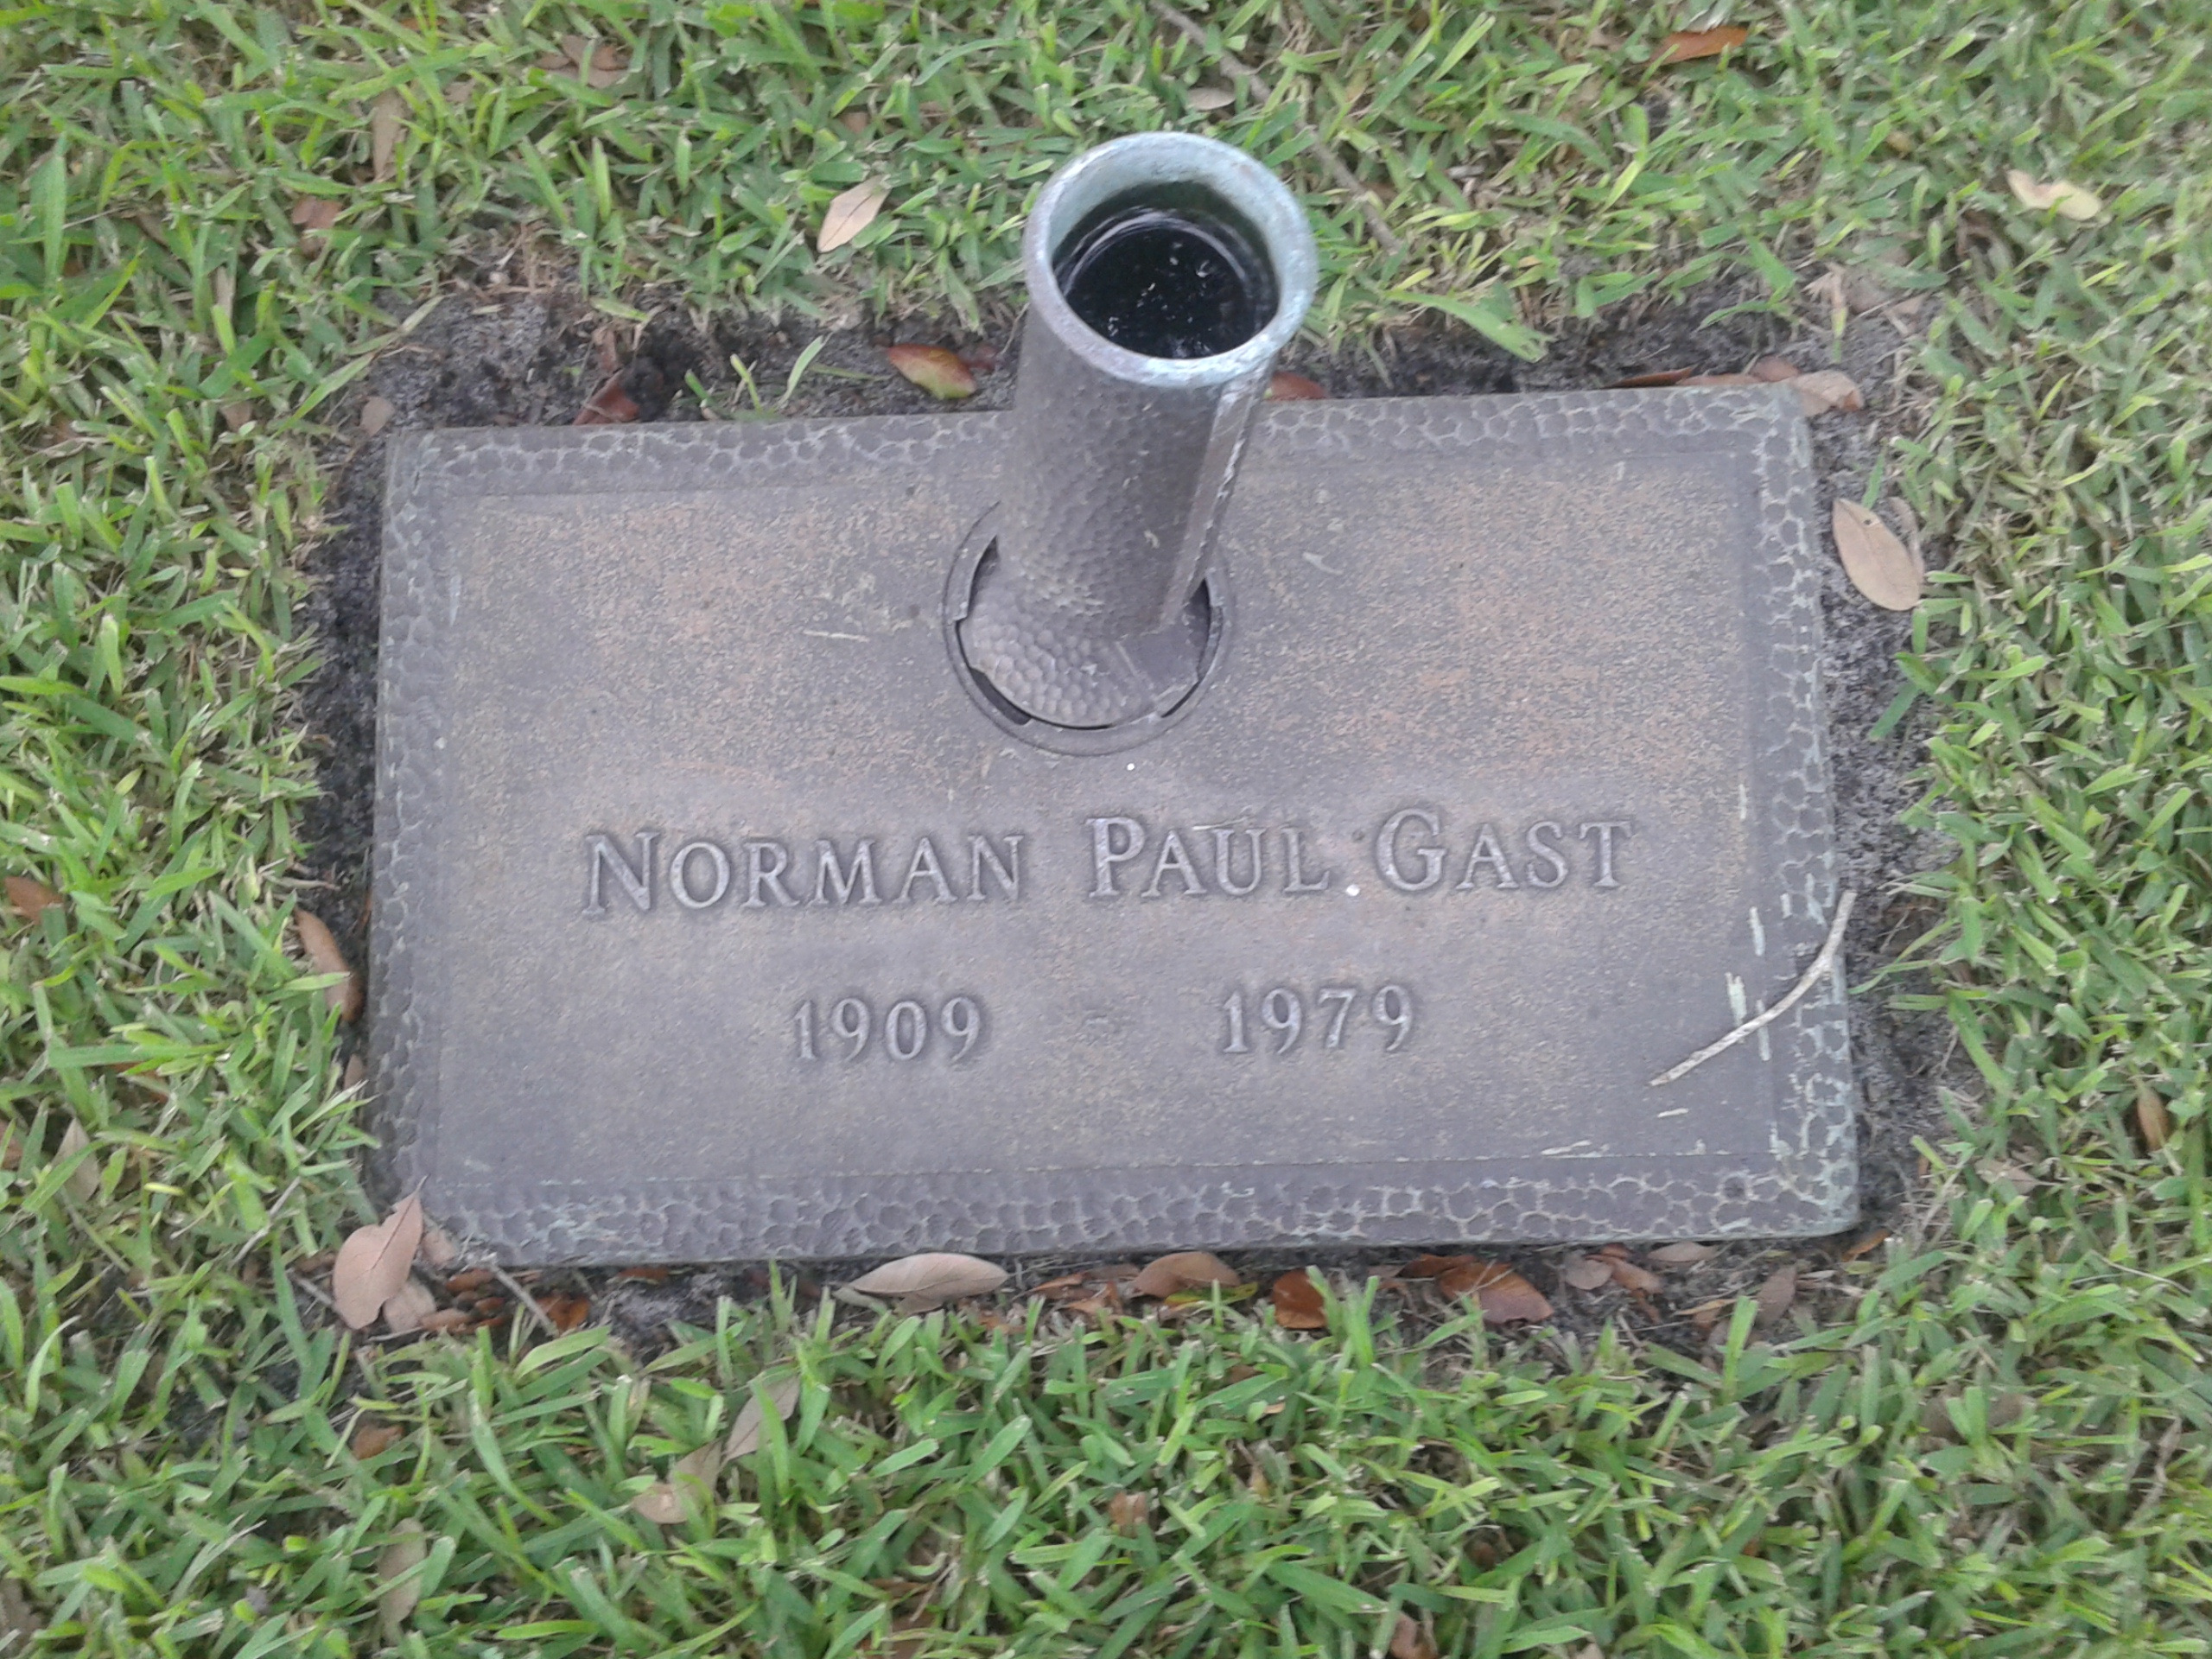 Norman Paul Gast